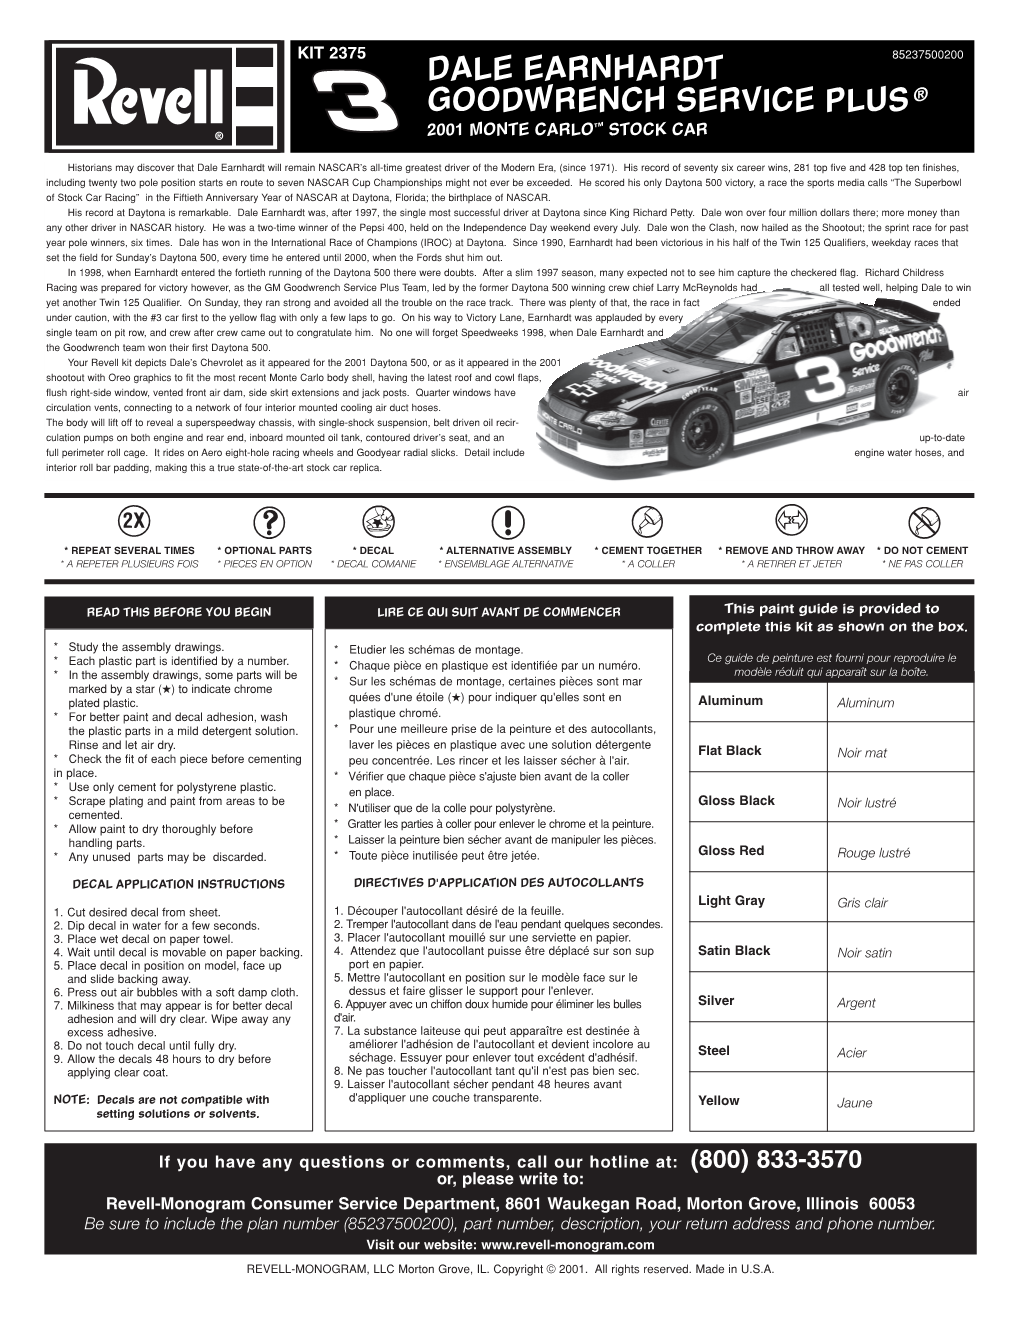 Dale Earnhardt Goodwrench Service Plus ® 2001 Monte Carlo™ Stock Car